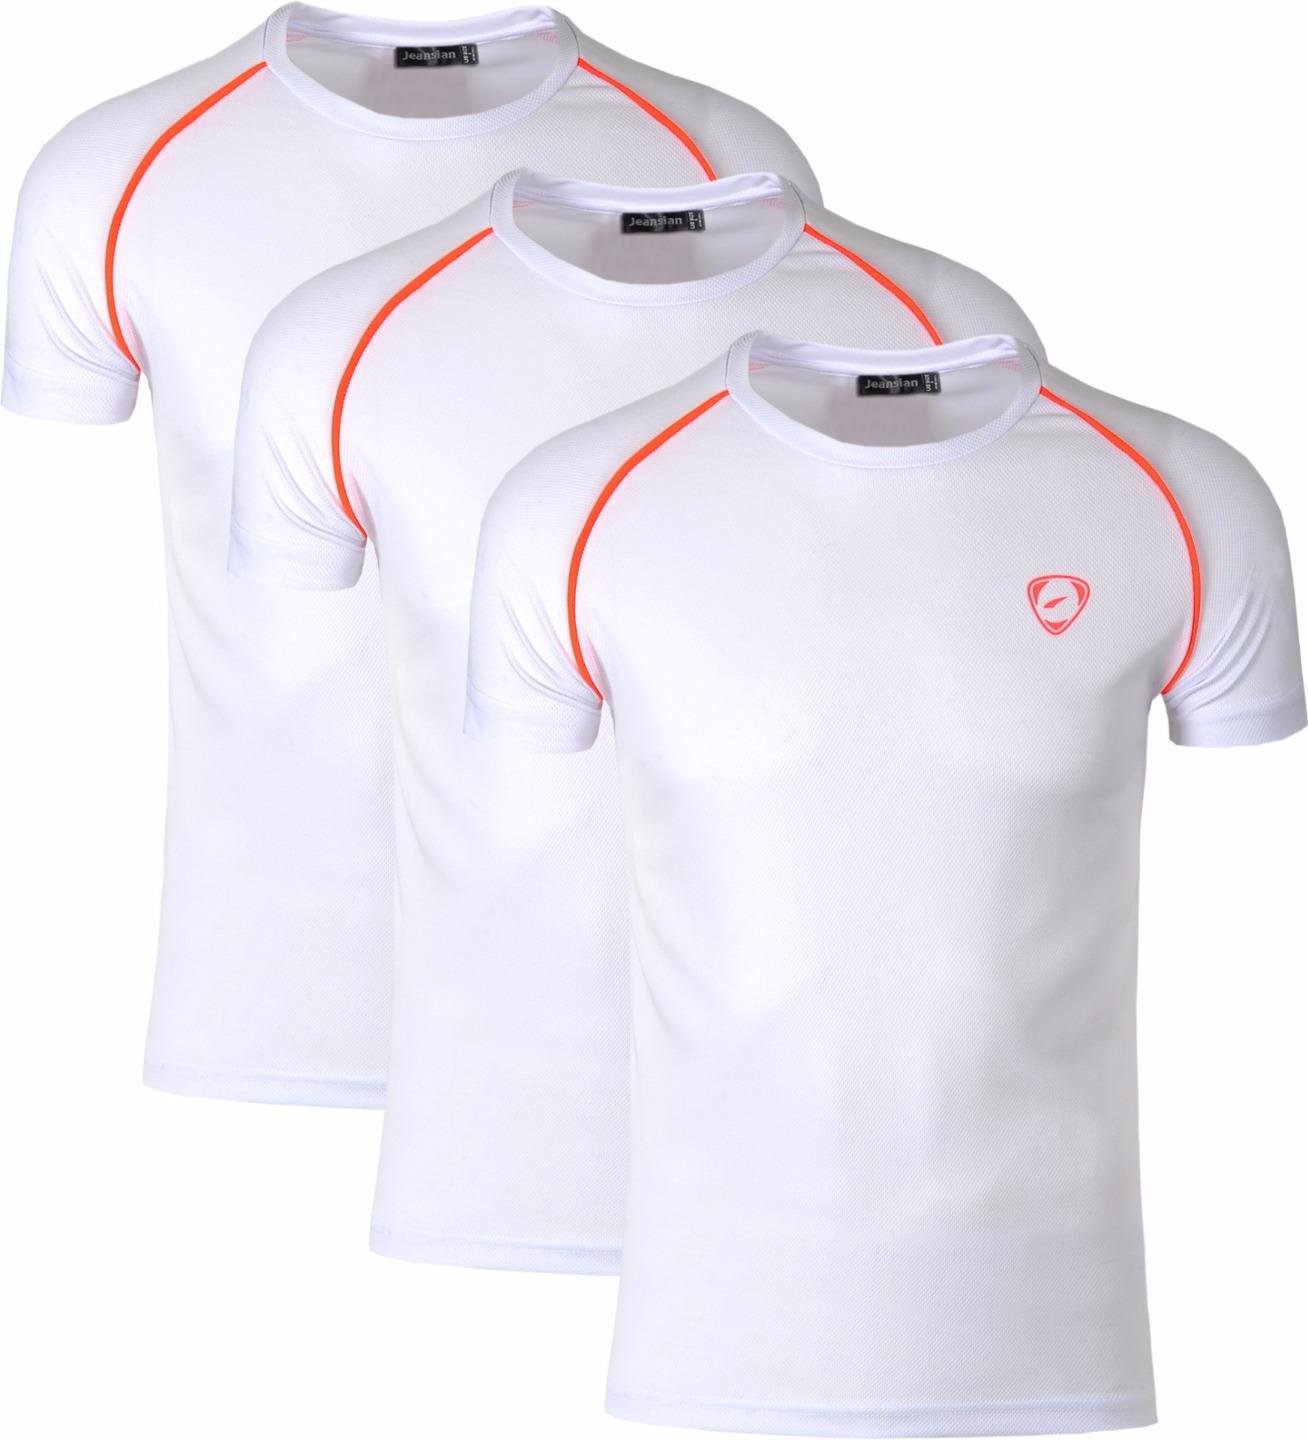 jeansian Herren Sportswear 3 Packs Sport Slim Short Sleeves Compression T-Shirt Tee LSL182 PackK M